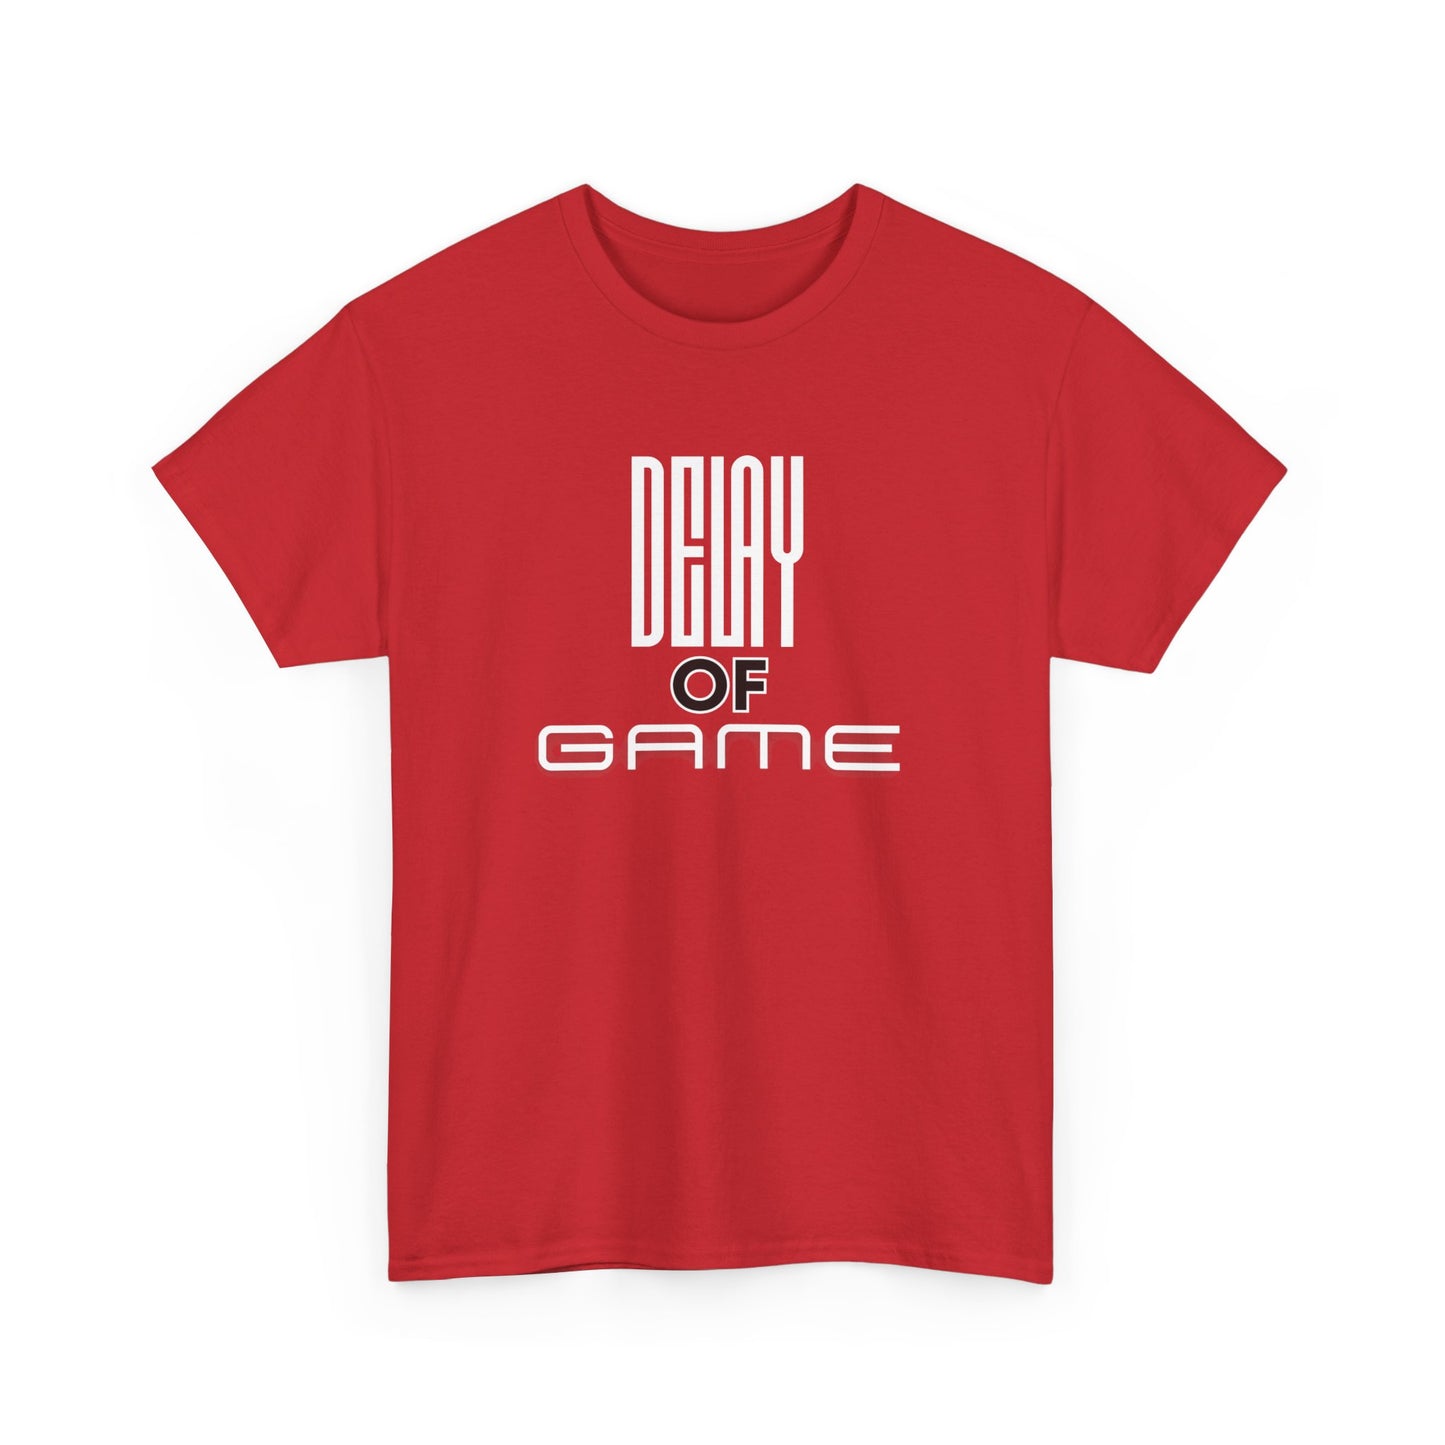 Unisex Heavy Cotton Graphic design (Delay of game) T-shirt